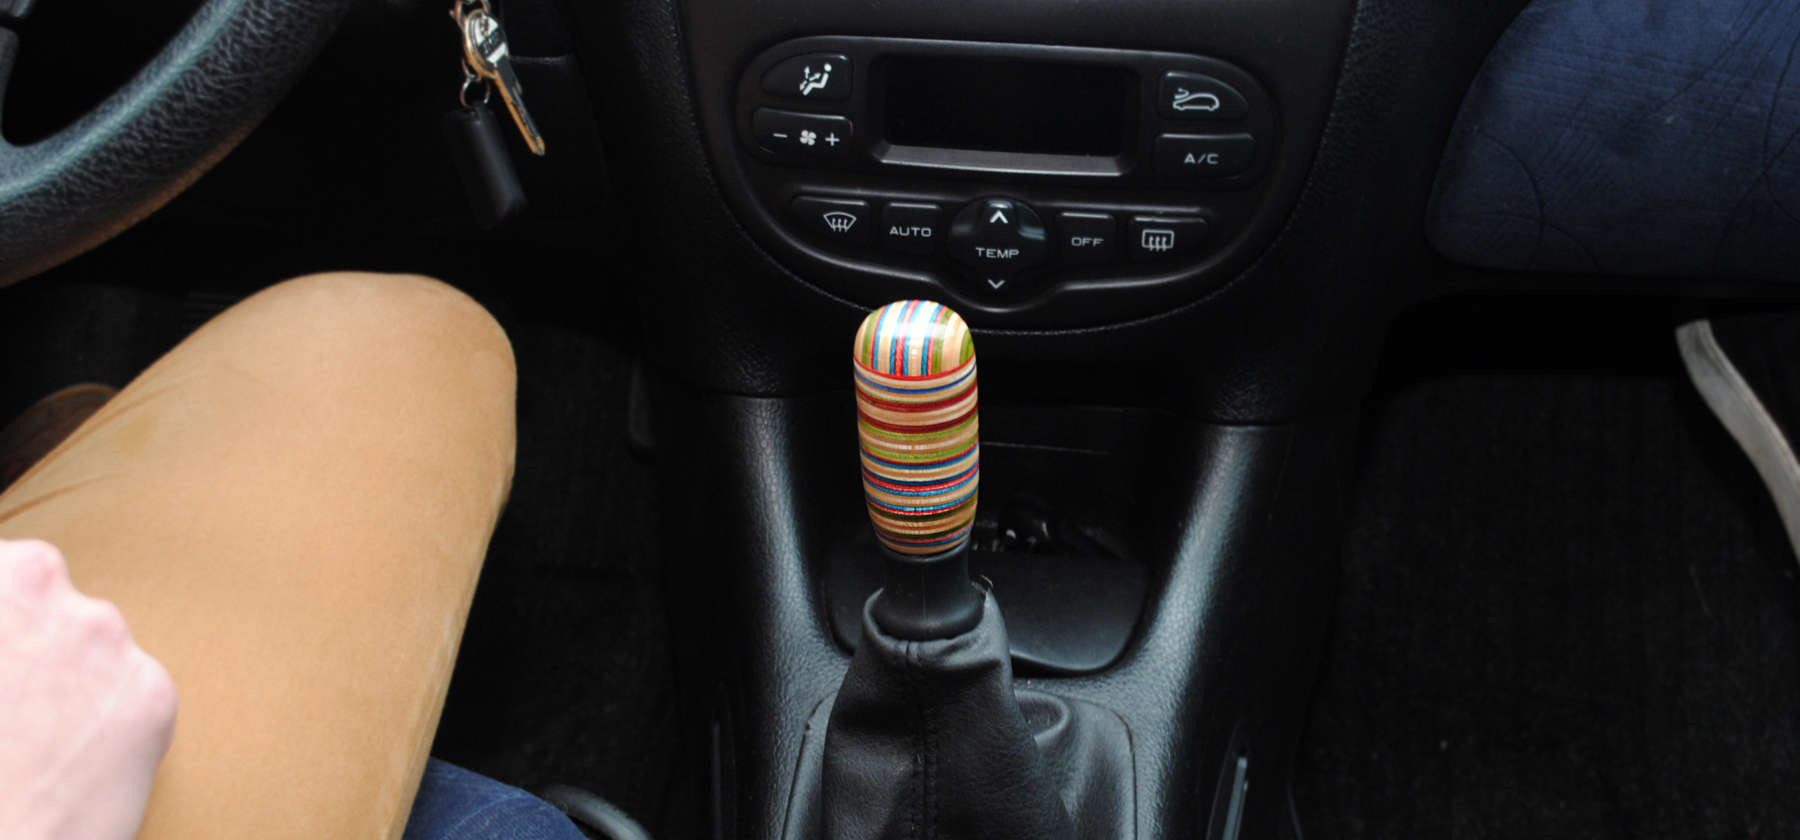 Peugeot 206 shift knob